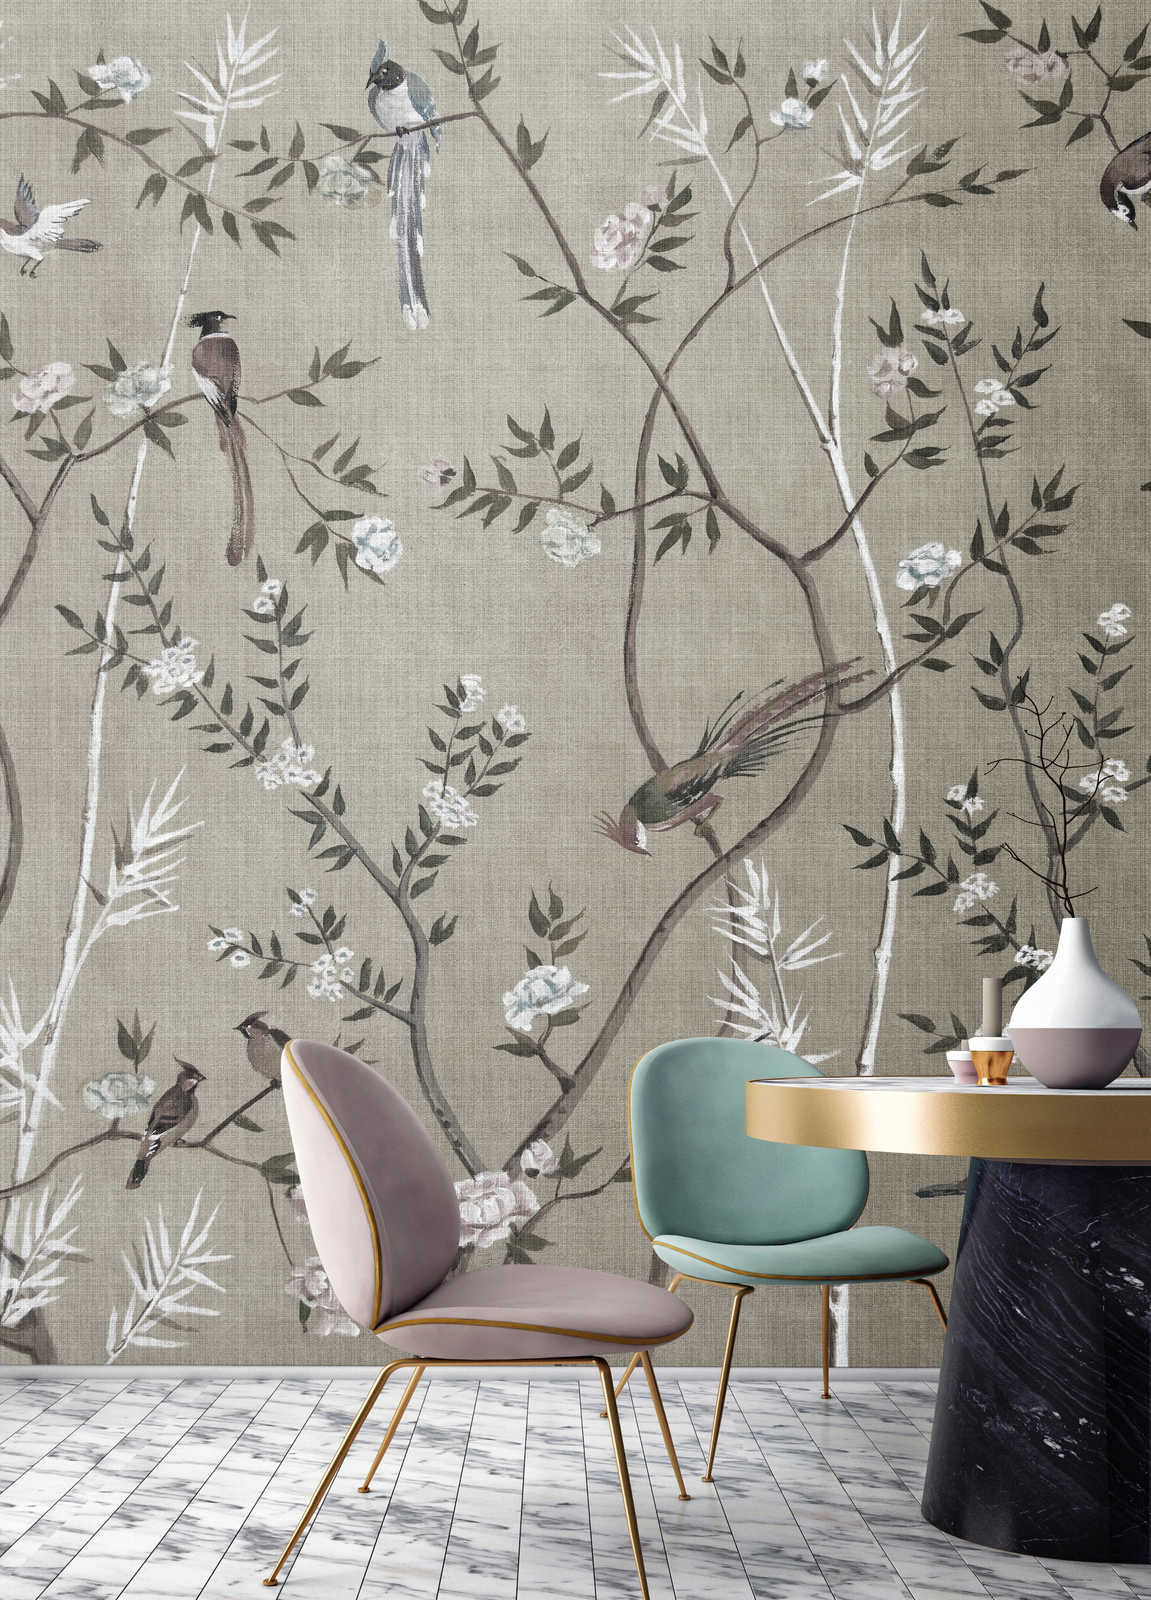             Tea Room 2 – Fototapete Vögel & Blüten Design in Greige
        